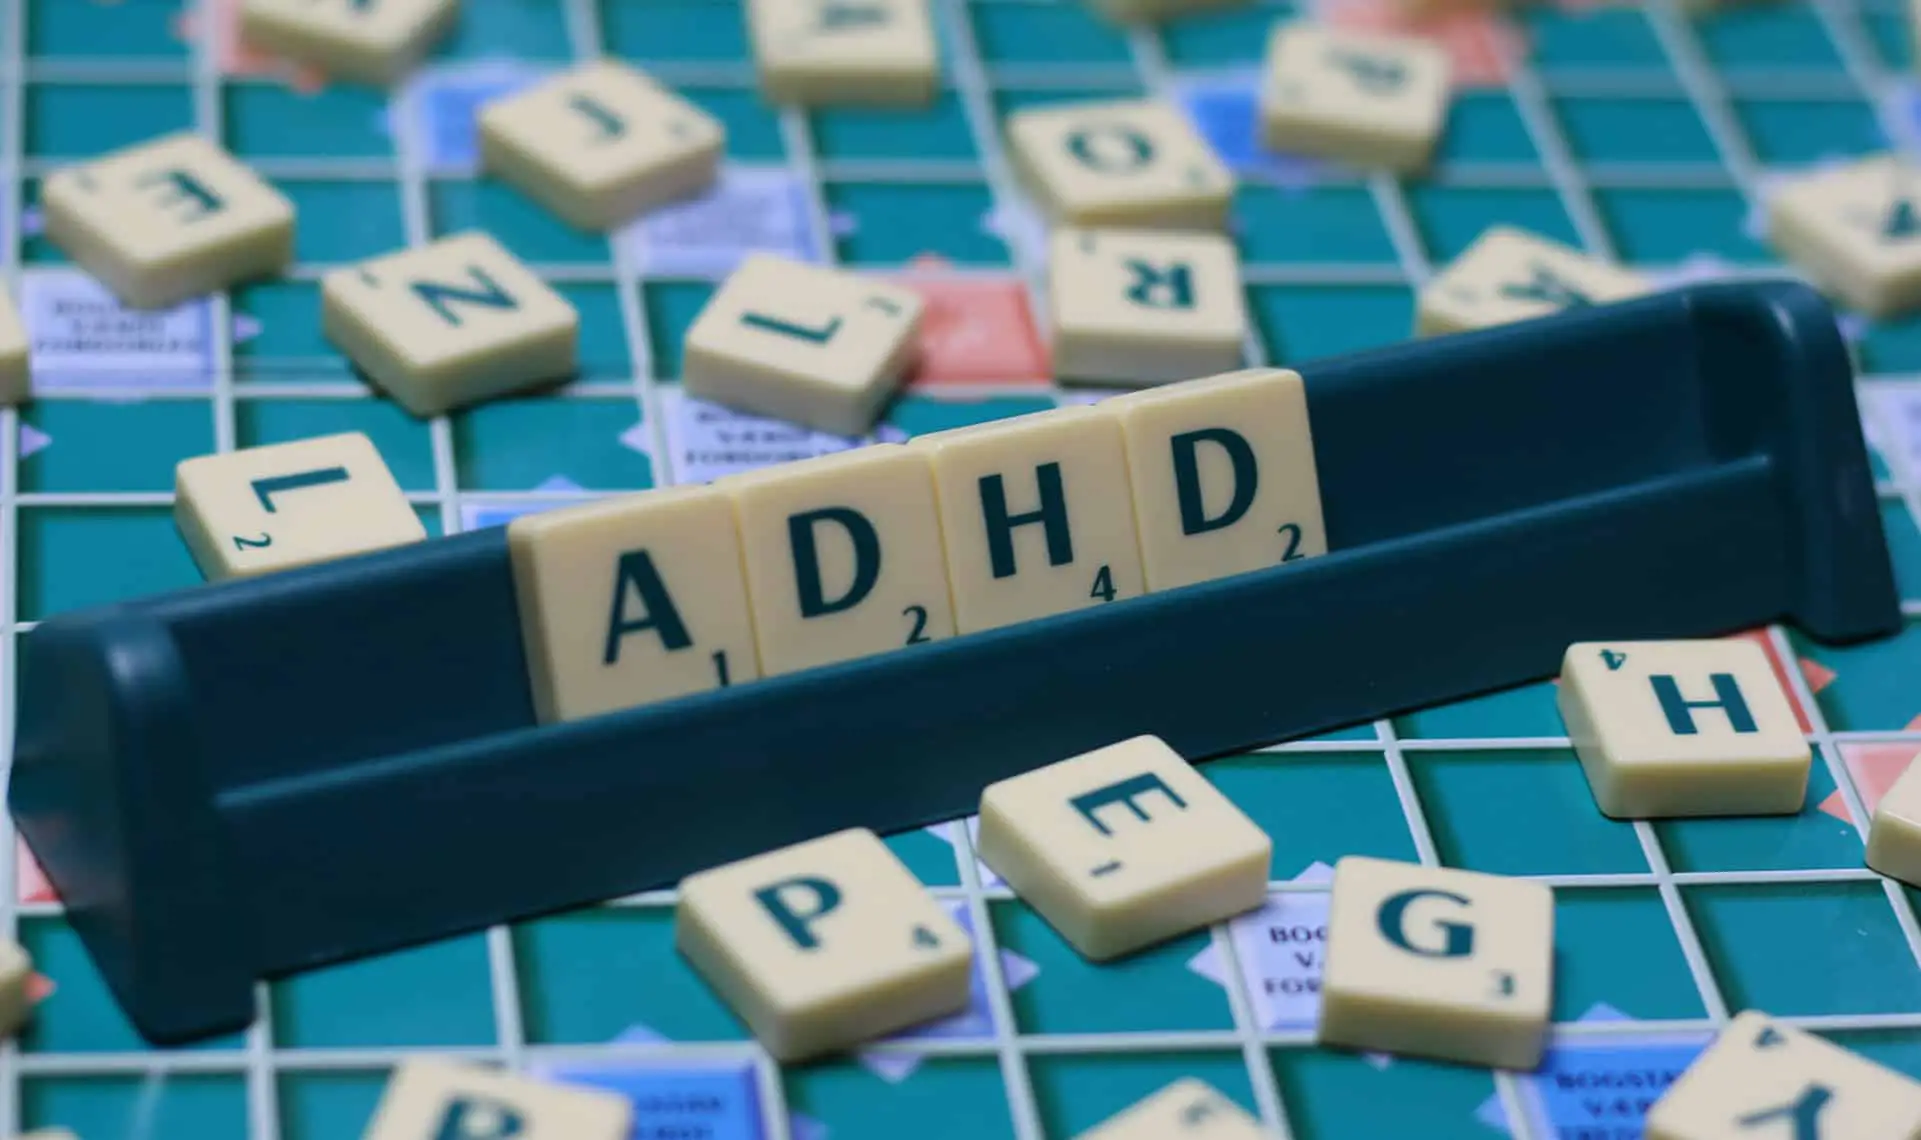 Scrabble letters spelling ADHD